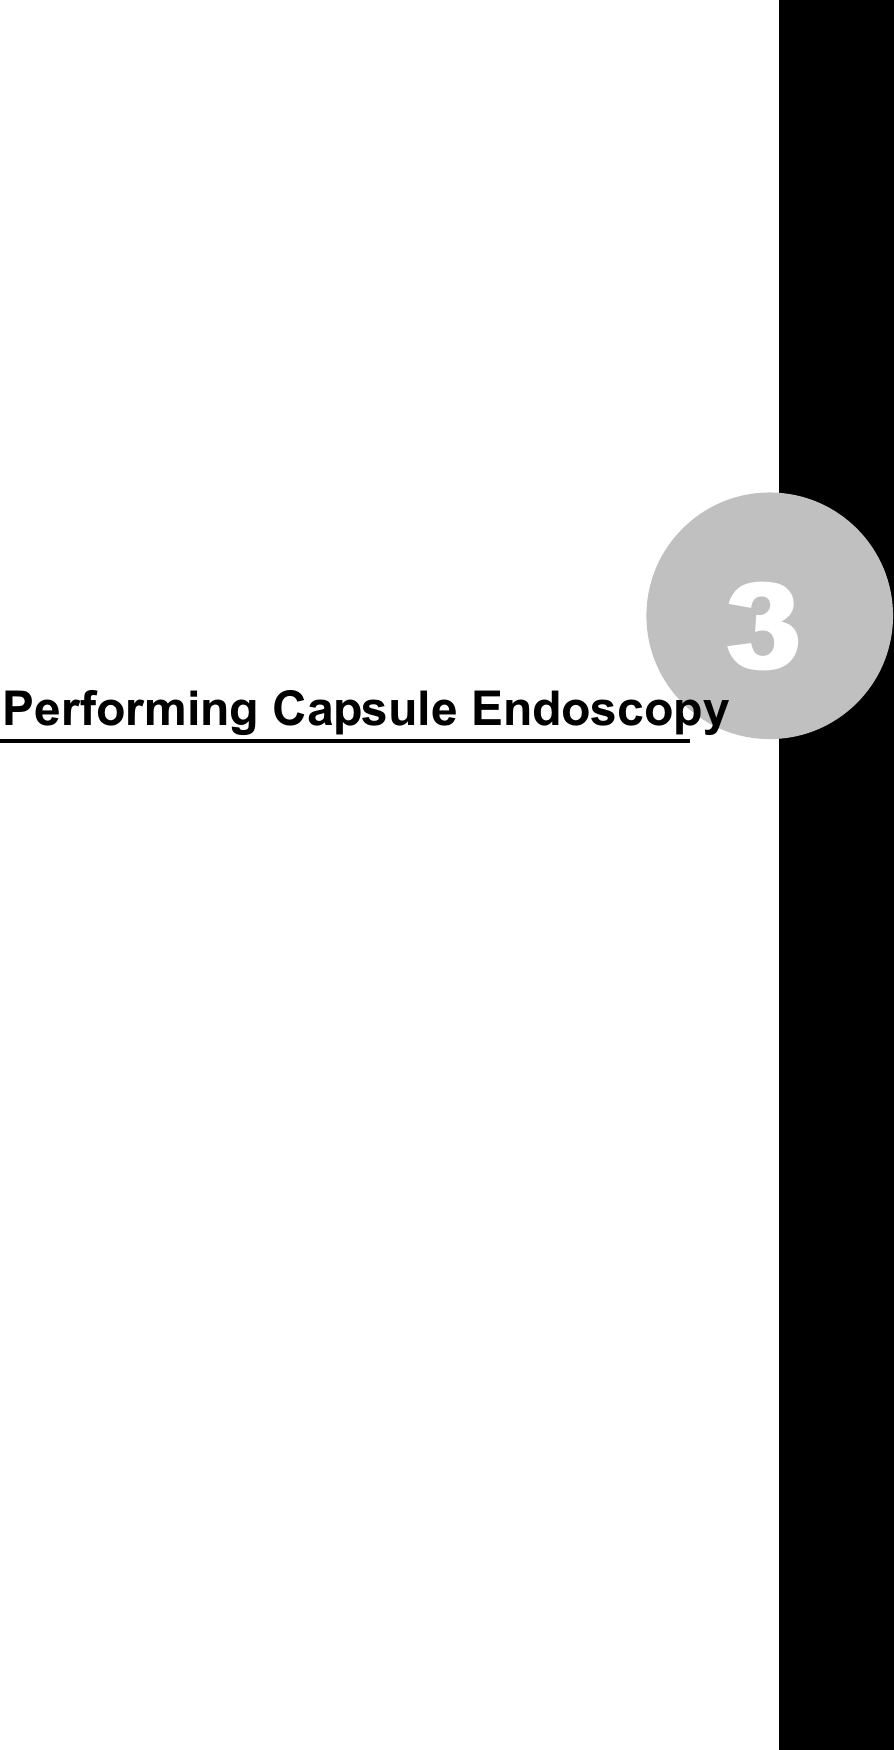   3                 Performing Capsule Endoscopy       